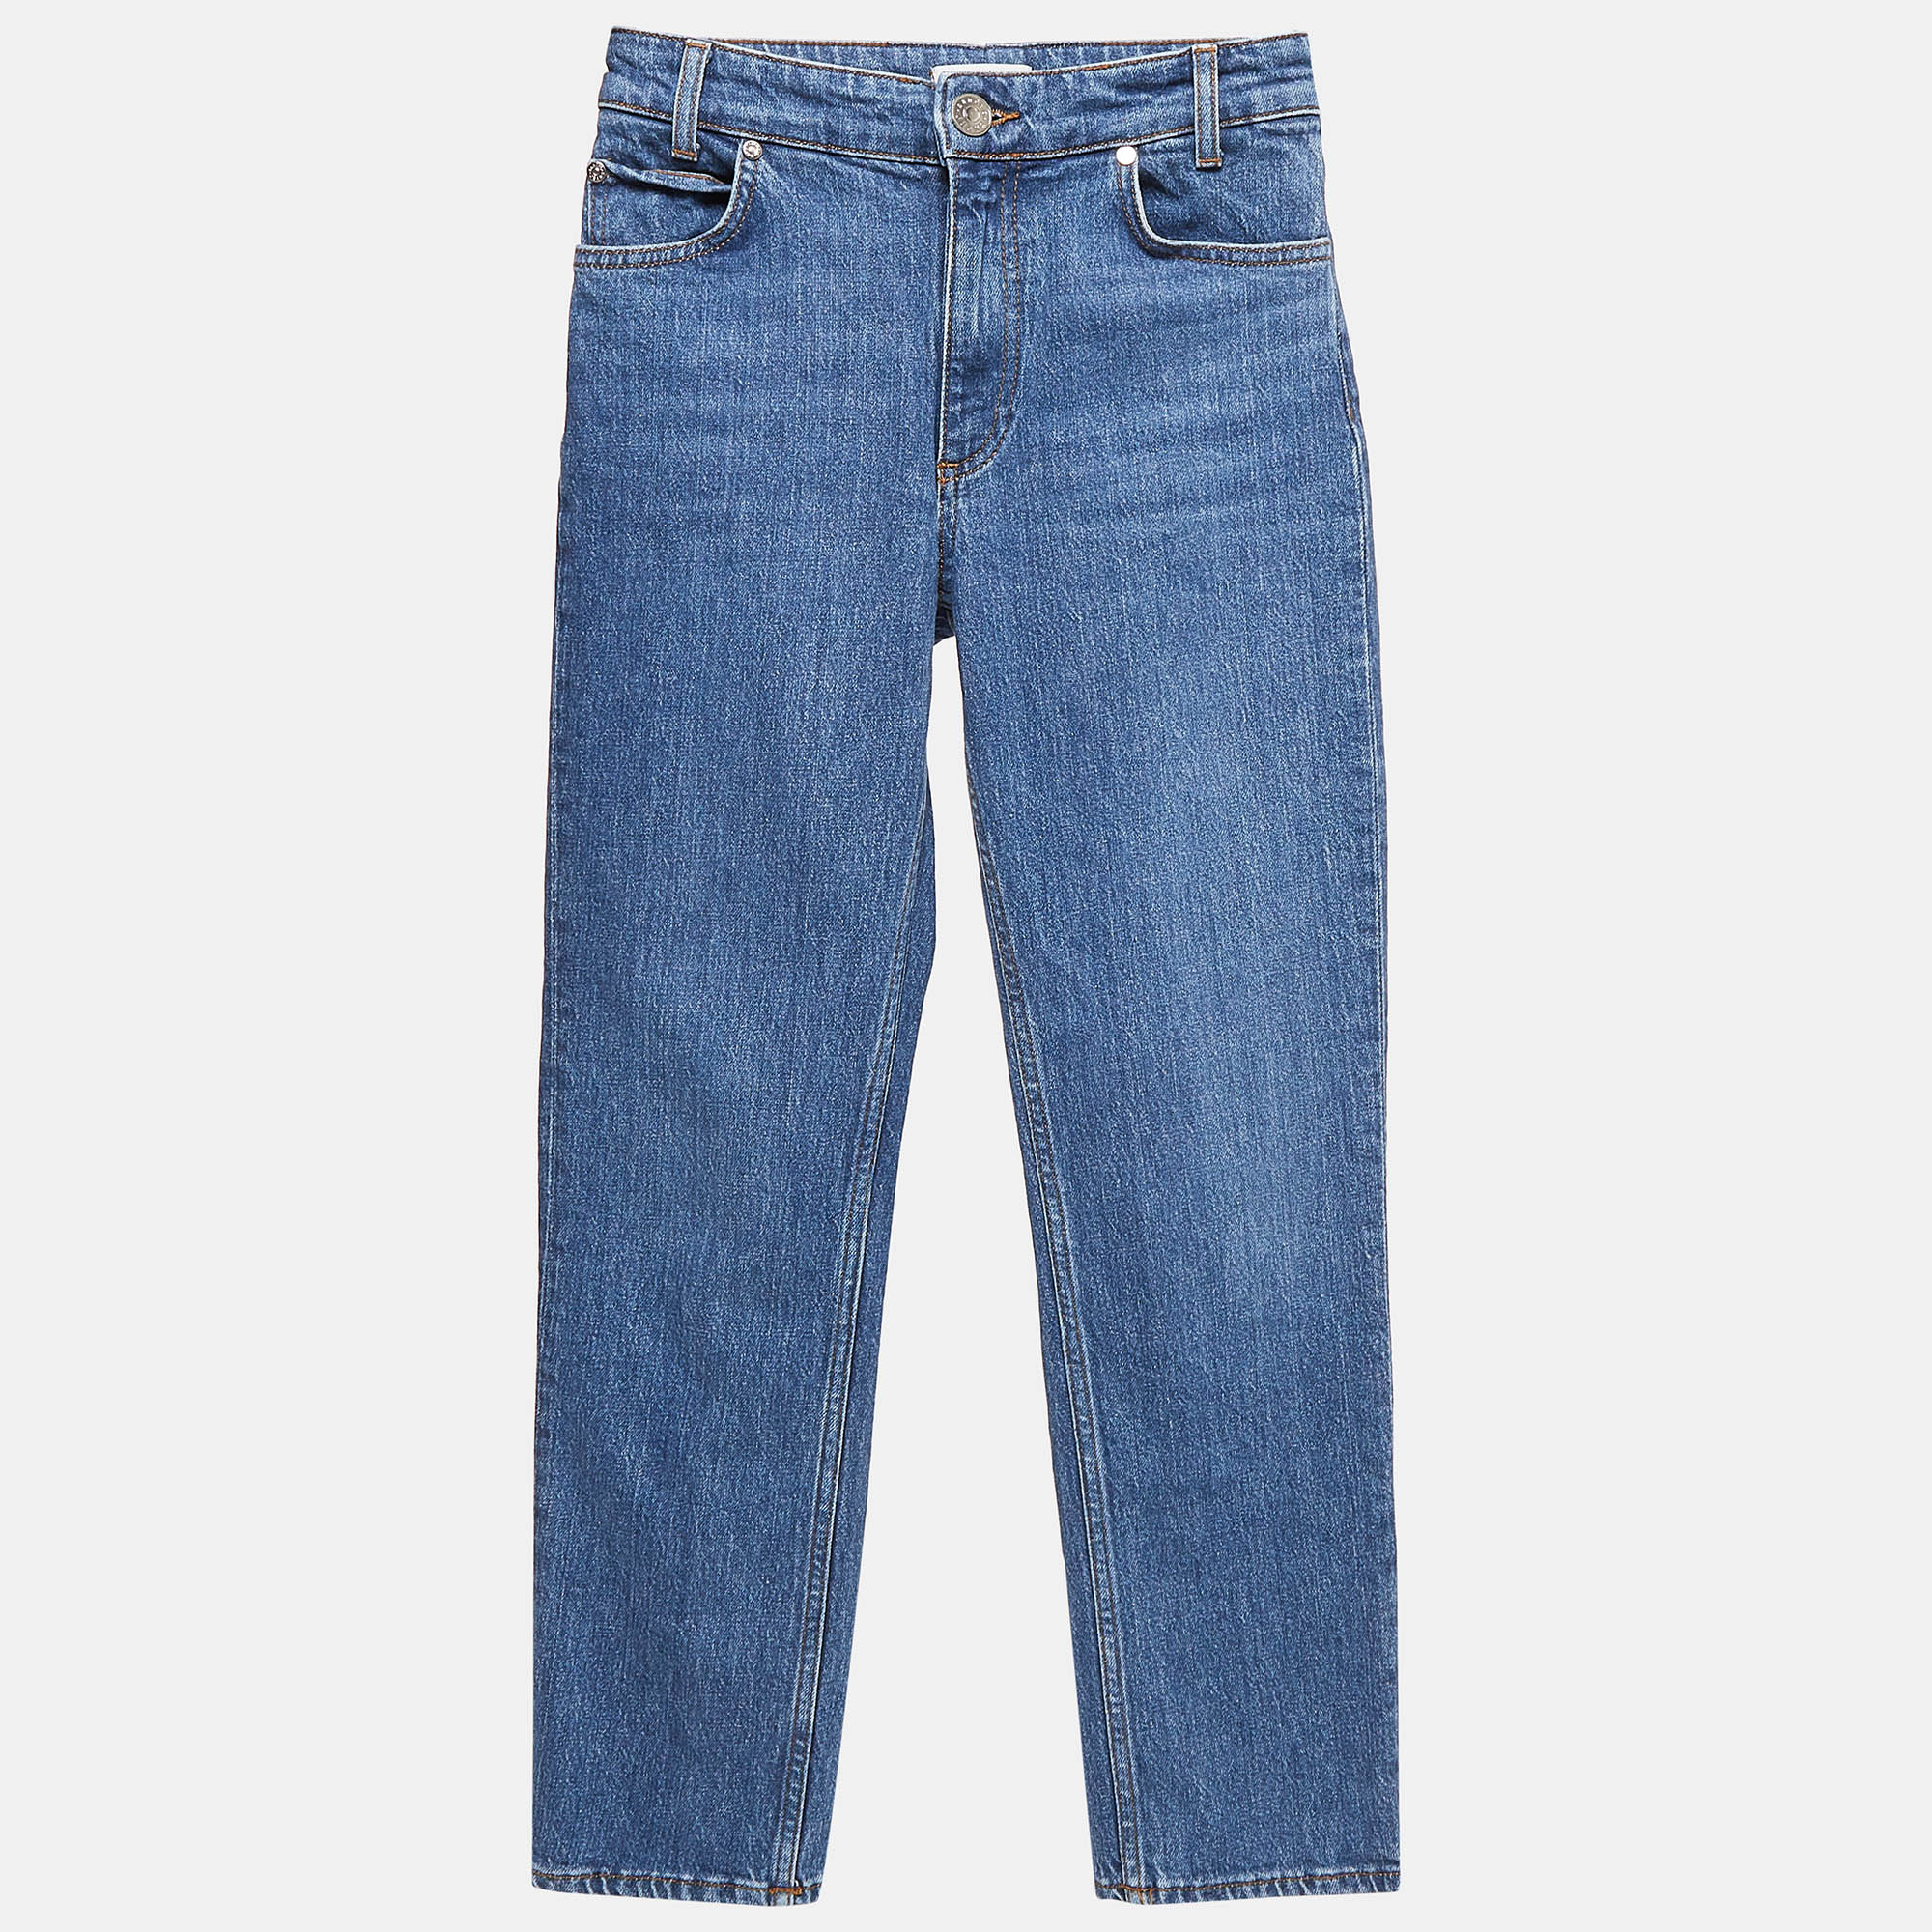 

Sandro Blue Denim Skinny Jeans XS Waist 26"